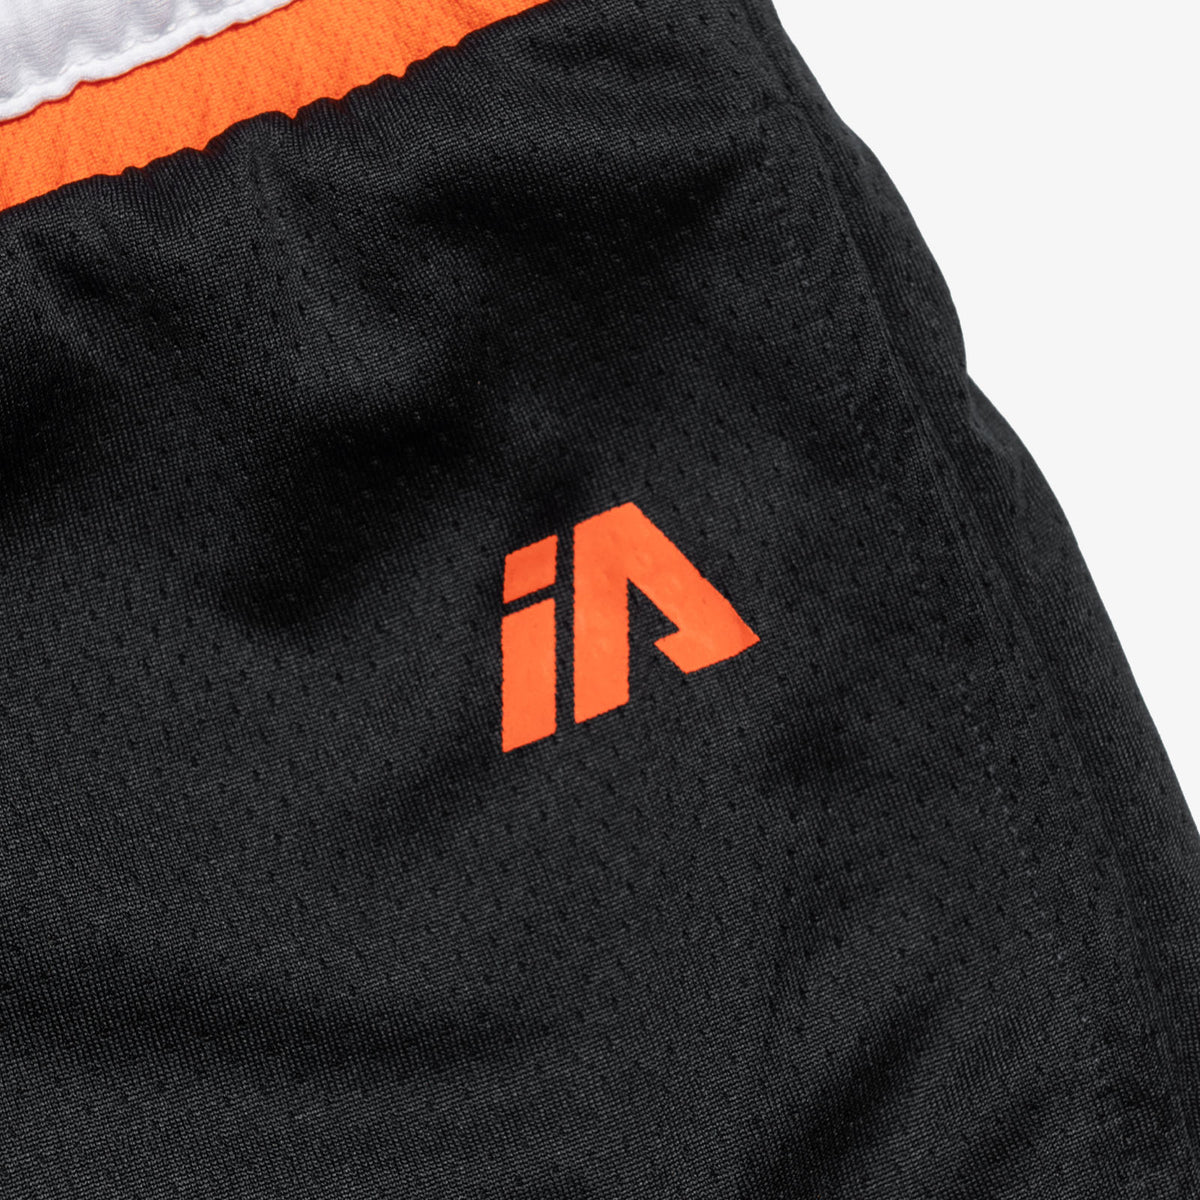 Basketball Pocket Shorts - Navy/Orange